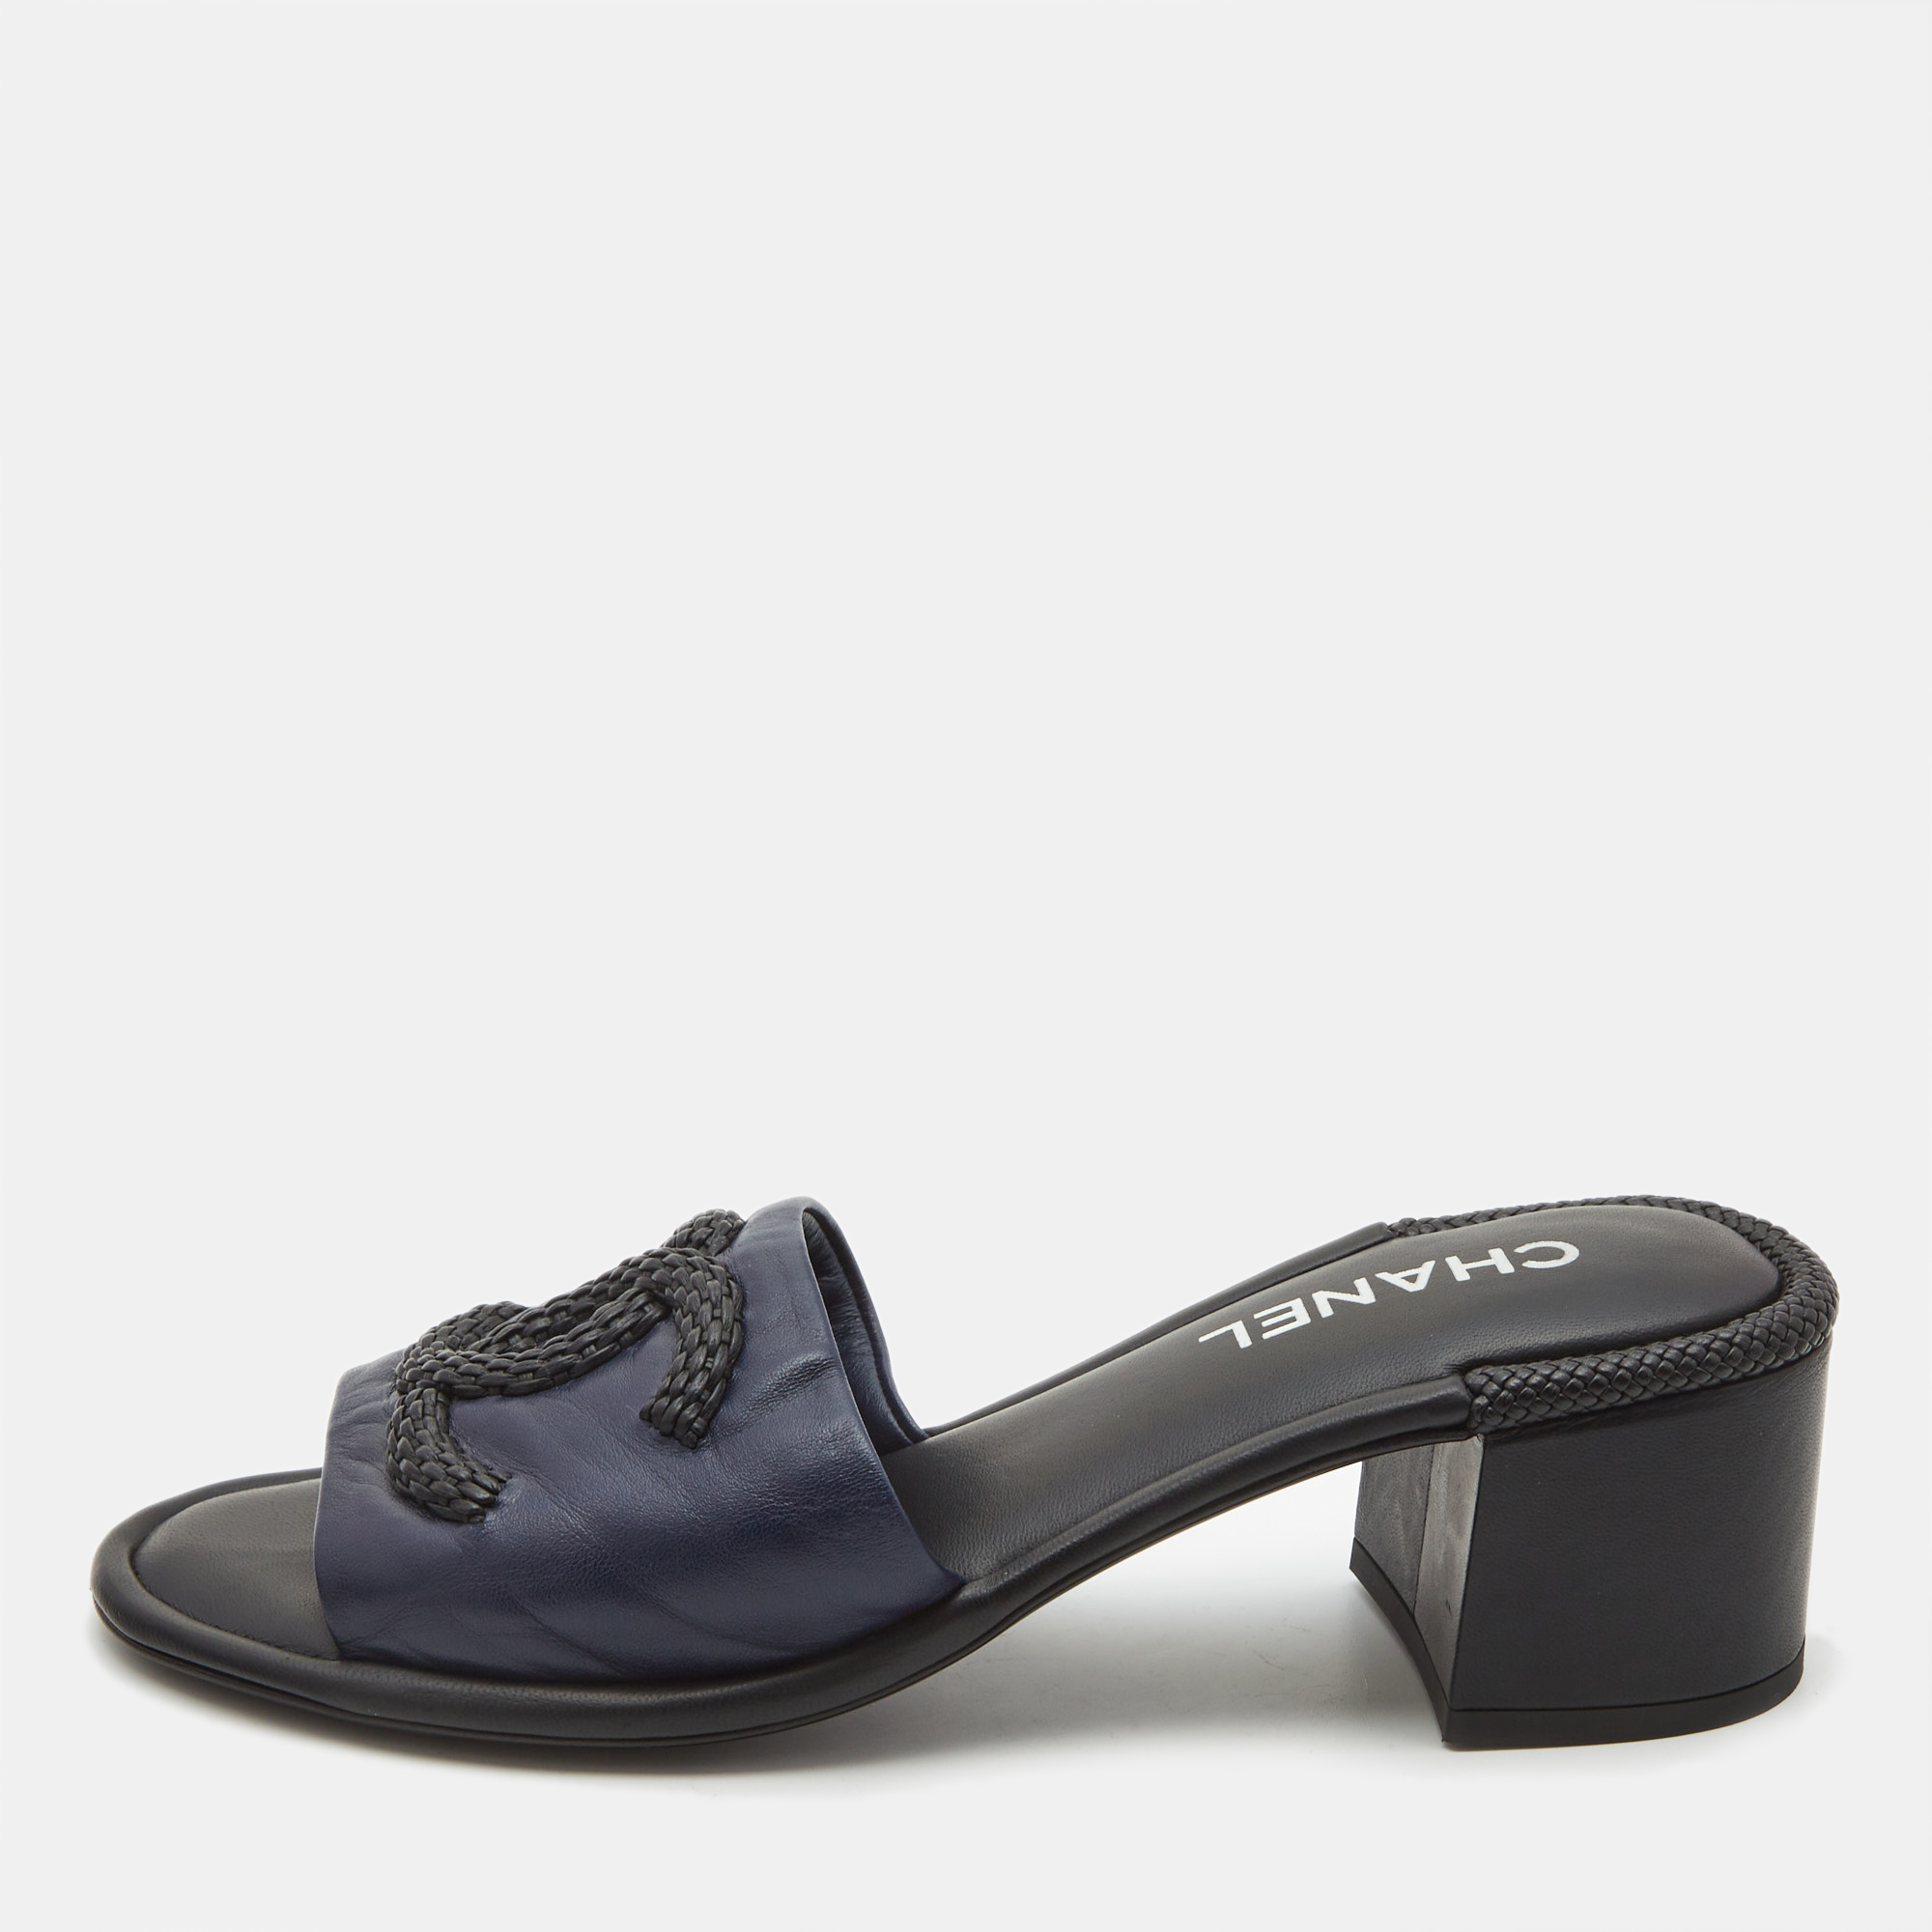 Chanel dark blue leather woven cc slide sandals size 40